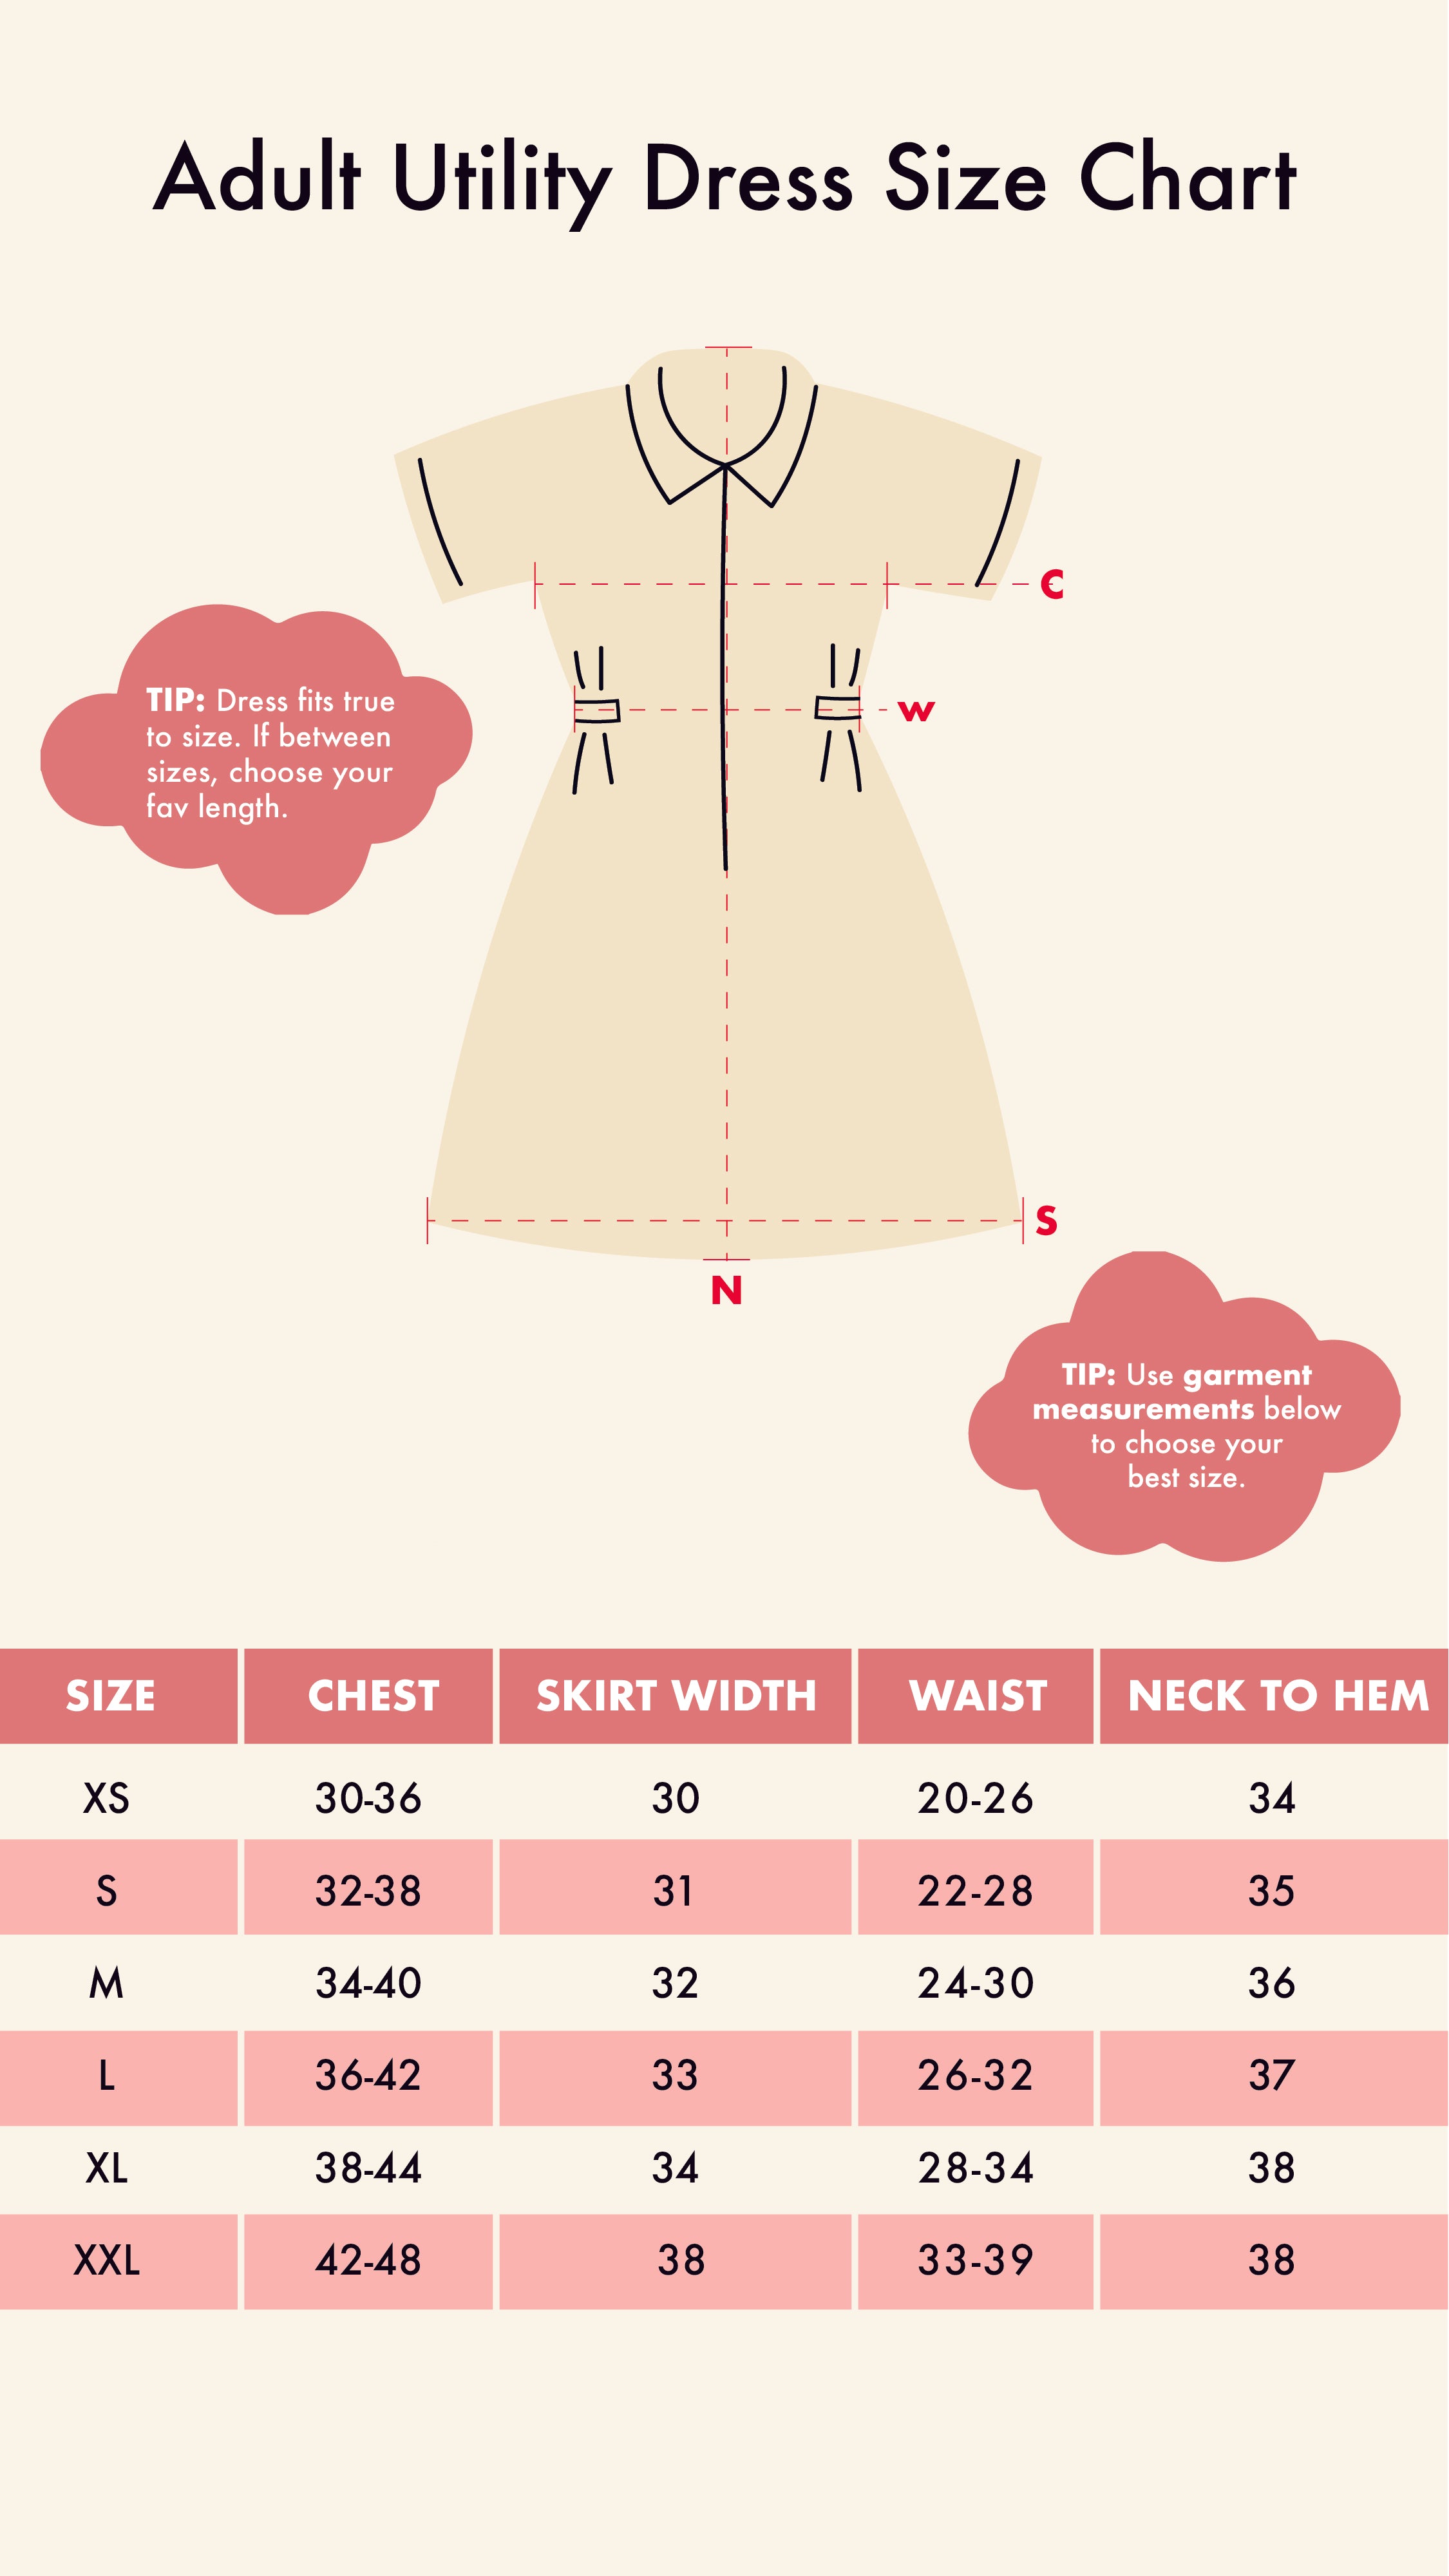 Adult Utility Dress Size Chart